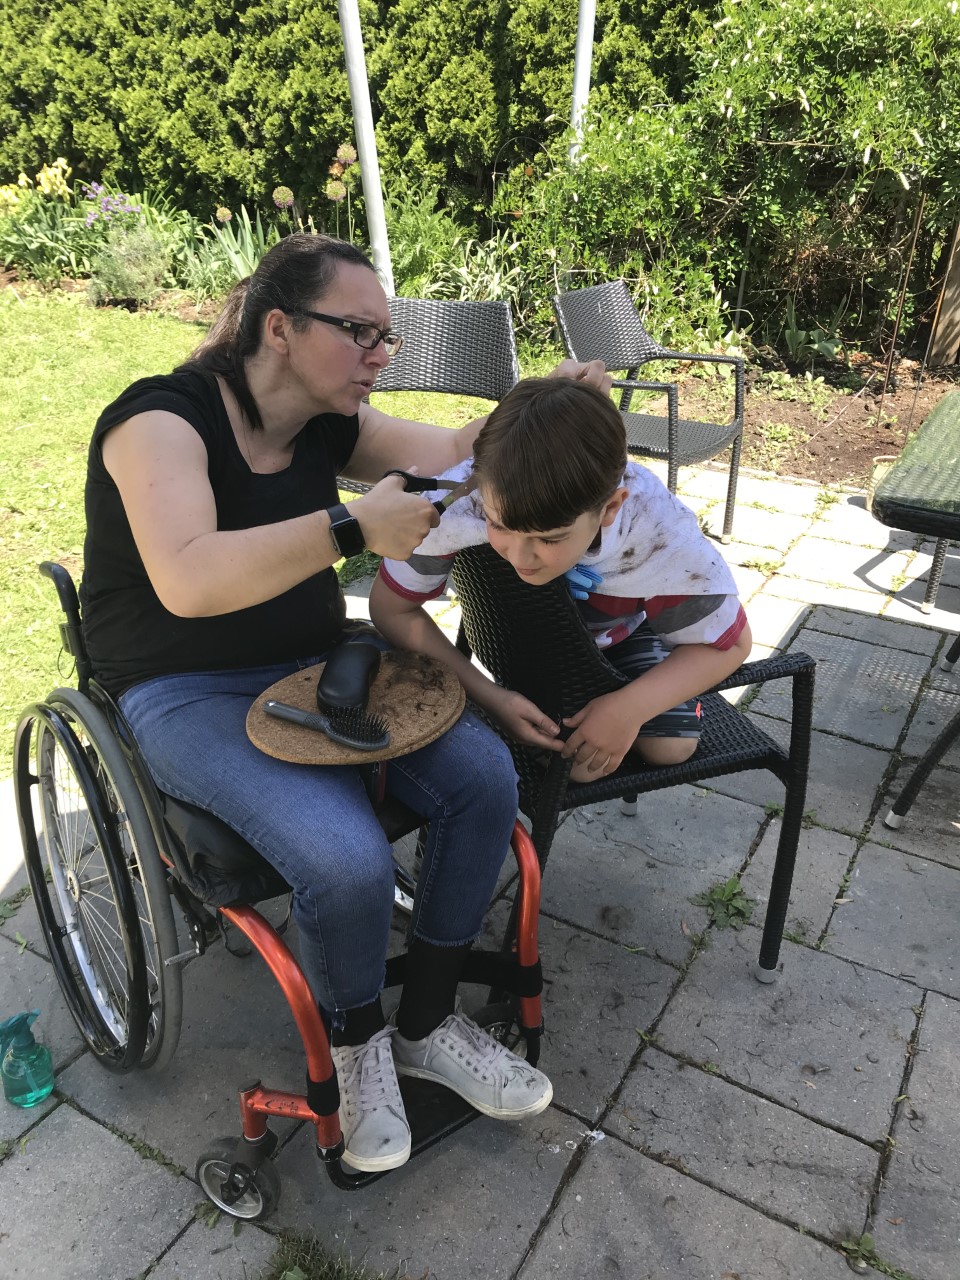 Woman sitting in wheelchair cuts boy's hair outside.